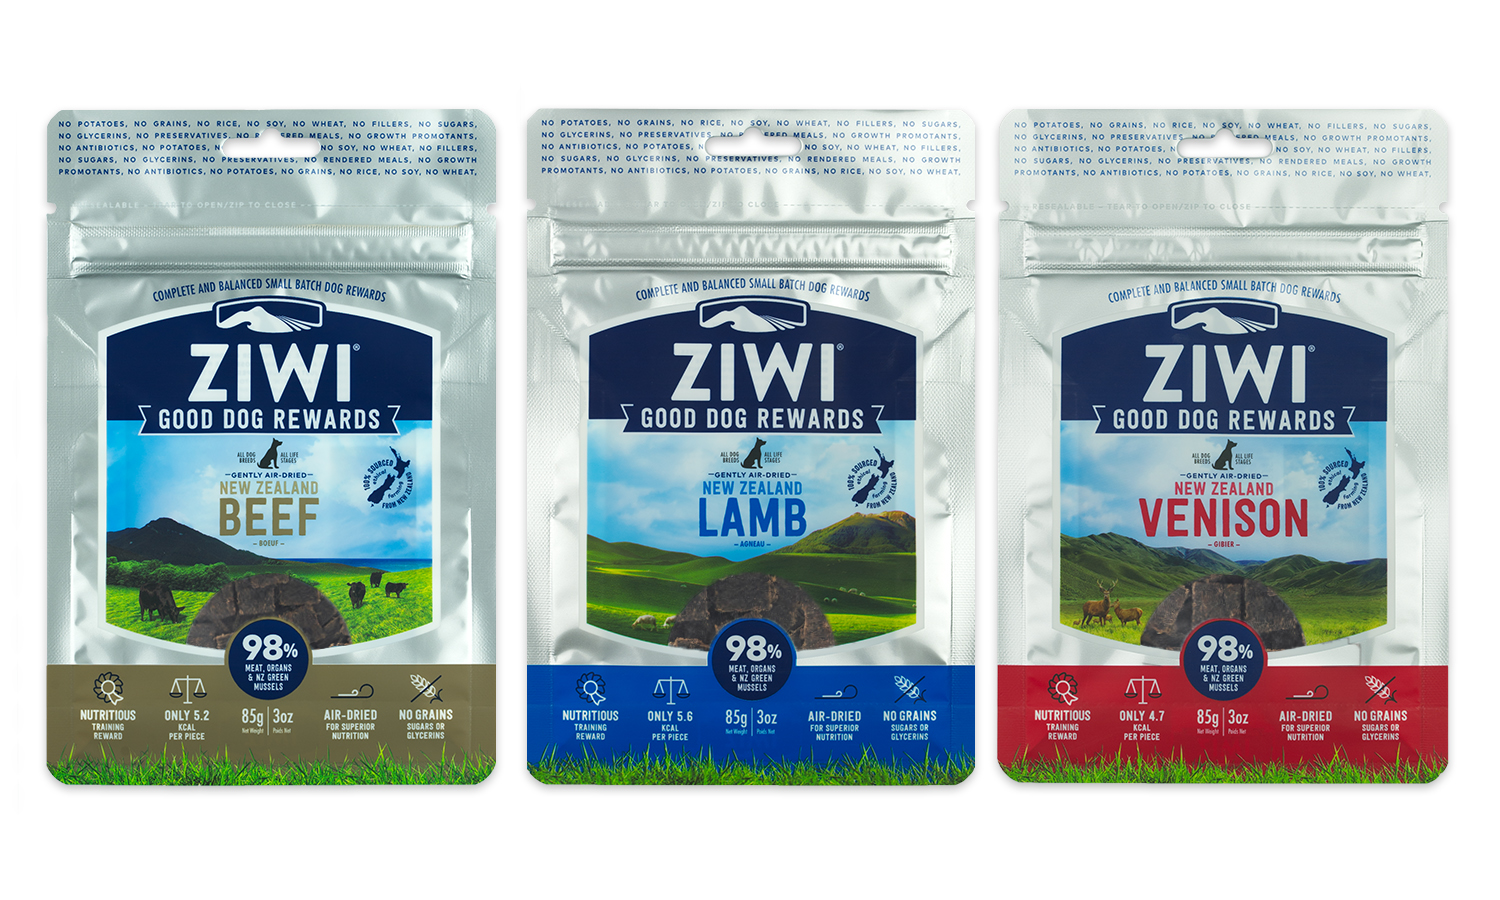 Ziwi Ltd – Ziwi Good Dog Rewards